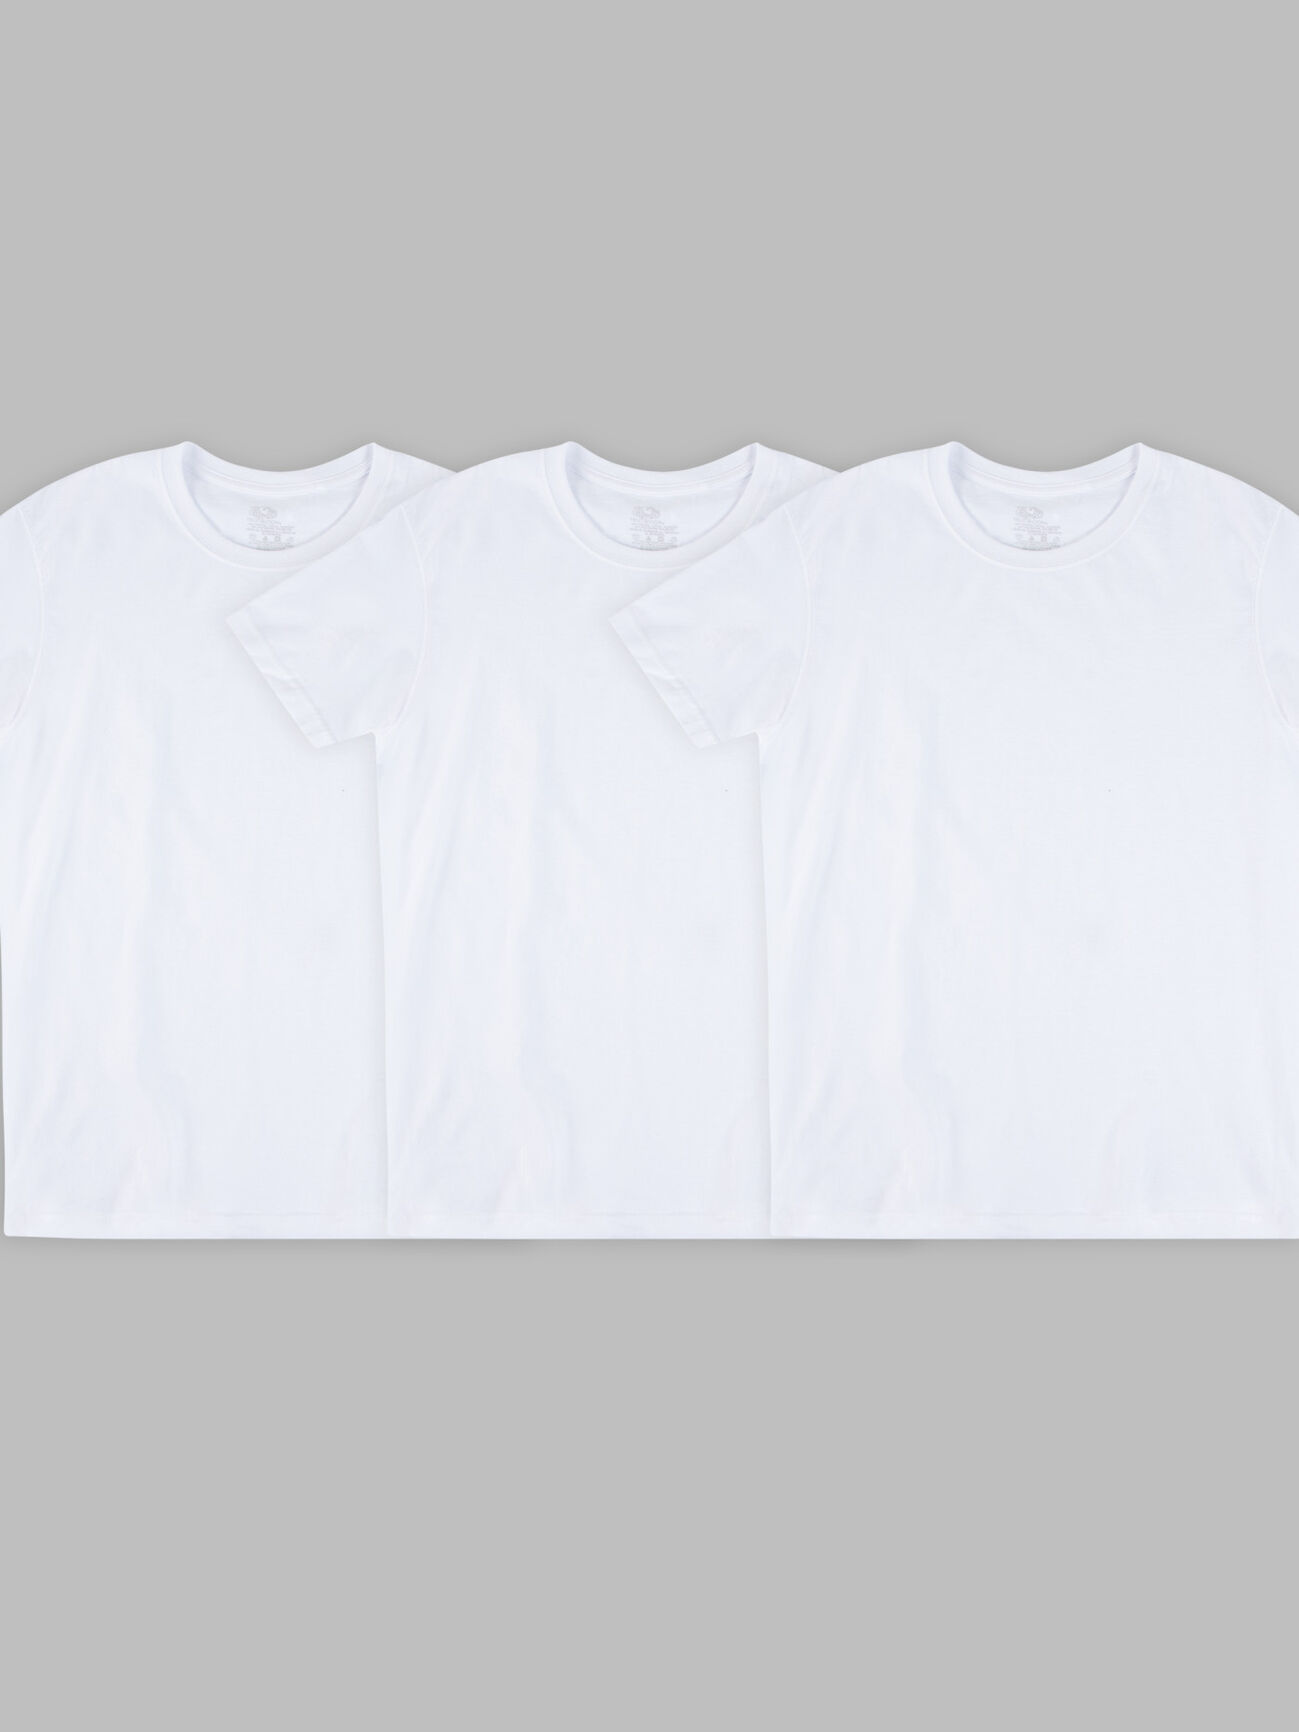 Fruit Loom Select Comfort Supreme Cooling Blend Crew Neck T-shirts L 5 Pack  NIB • Tribunali Italiani